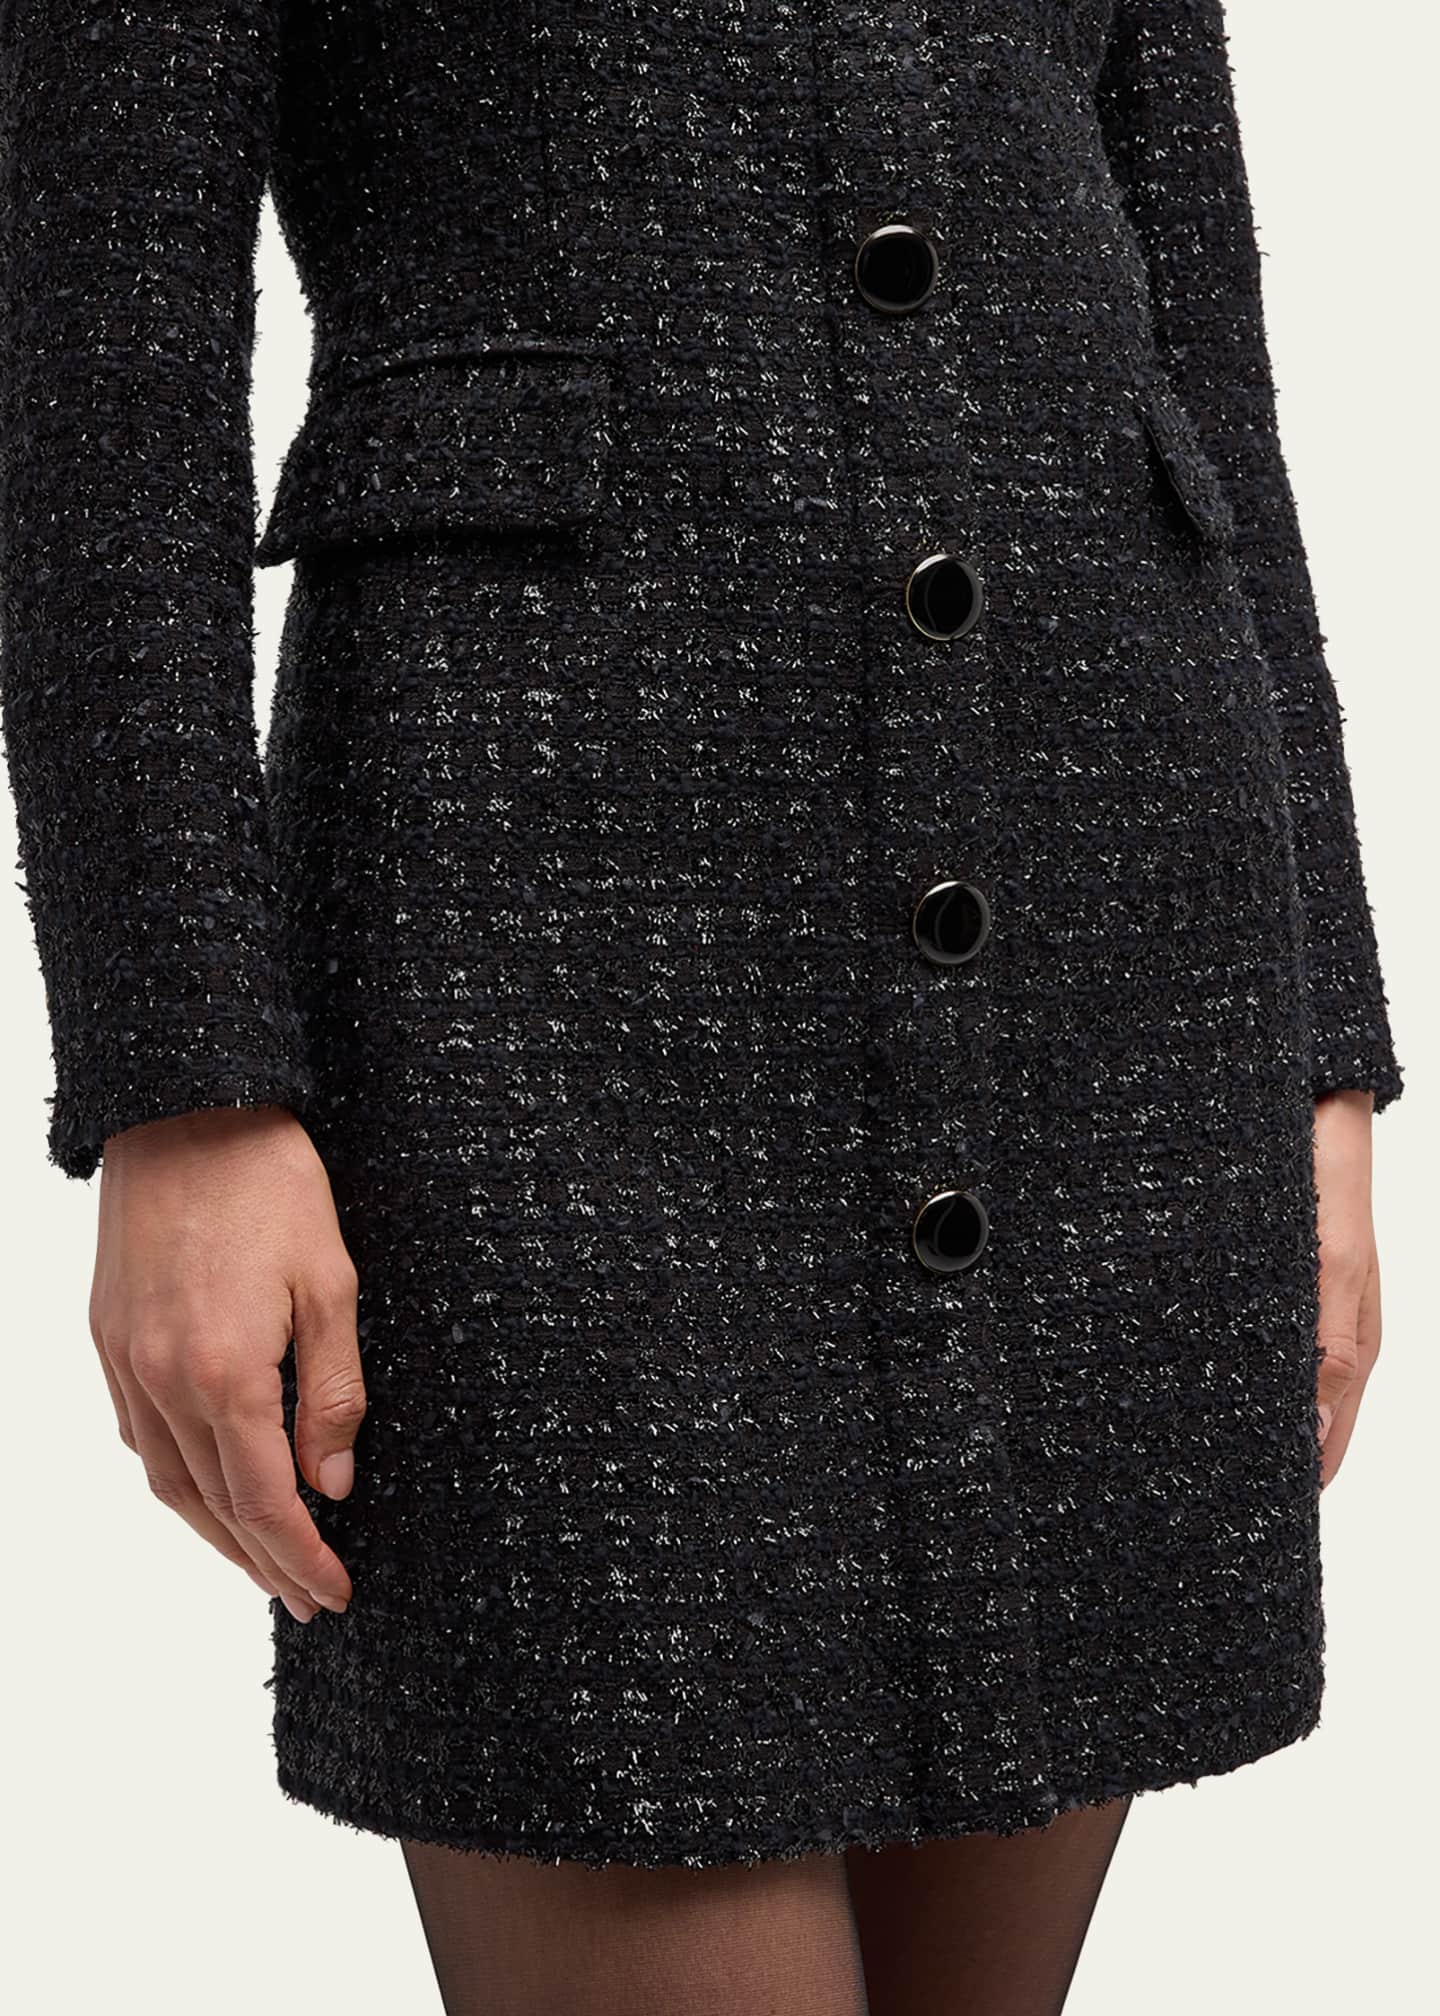 Palatine Tweed Dress by Veronica Beard for $85